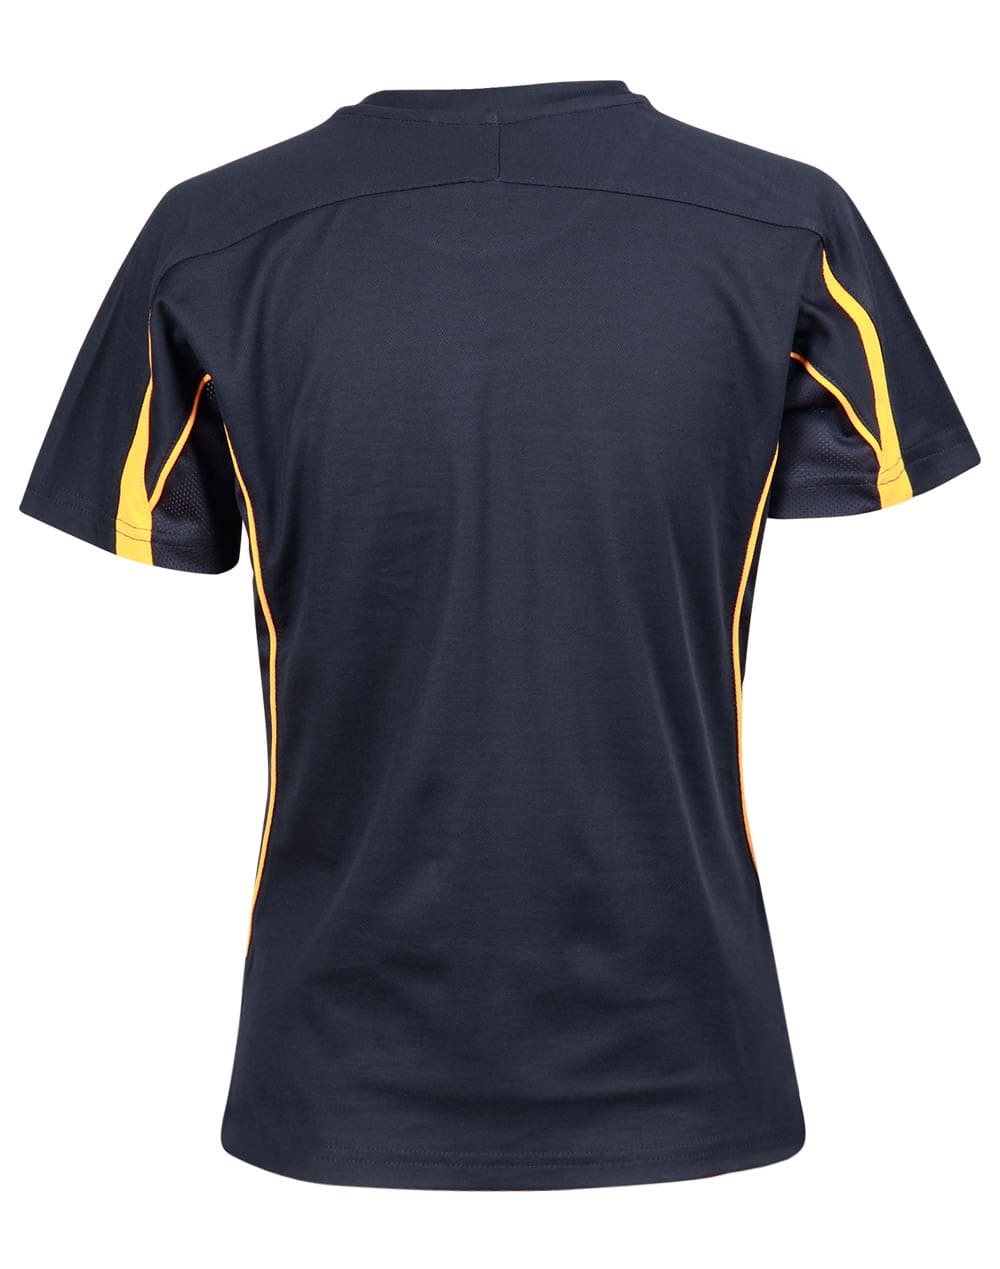 Custom Made (Black Ash) Legend Ladies Short Sleeve Tee Shirts Online in Perth